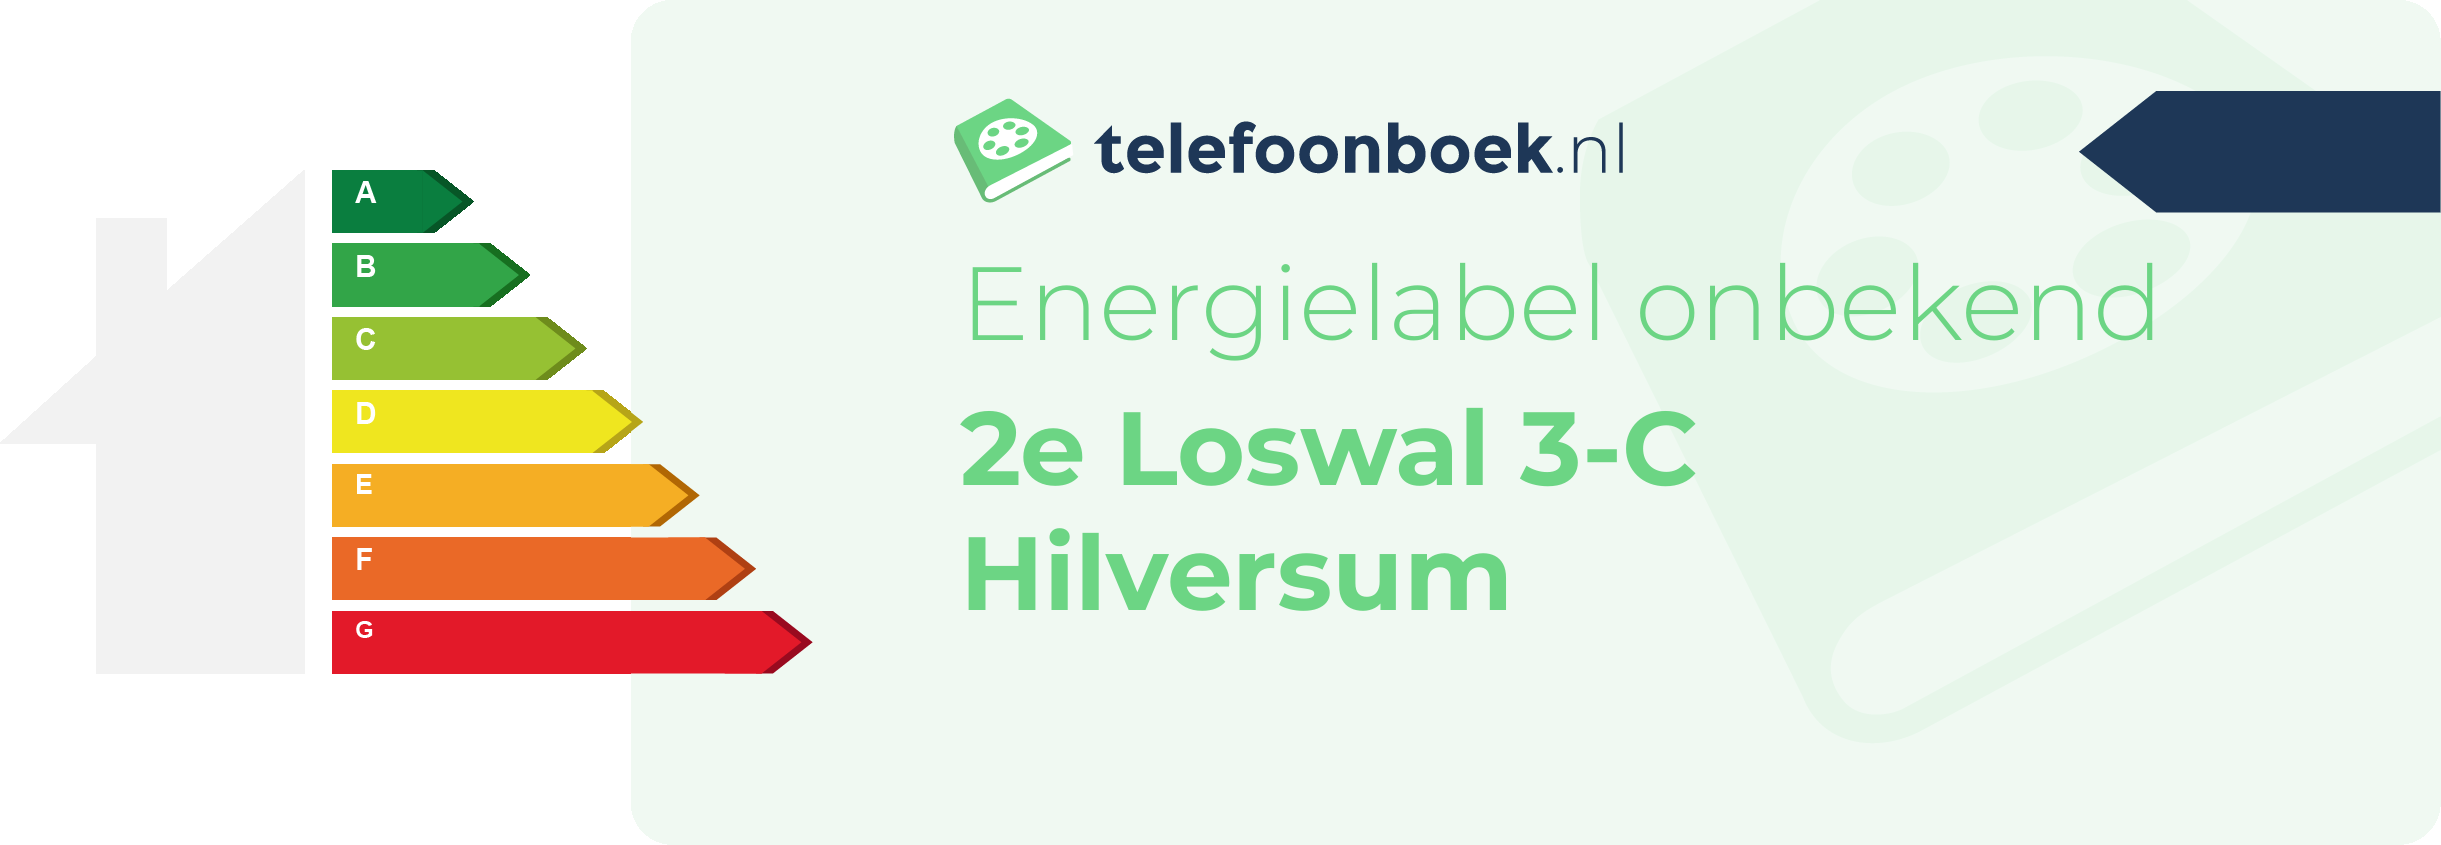 Energielabel 2e Loswal 3-C Hilversum